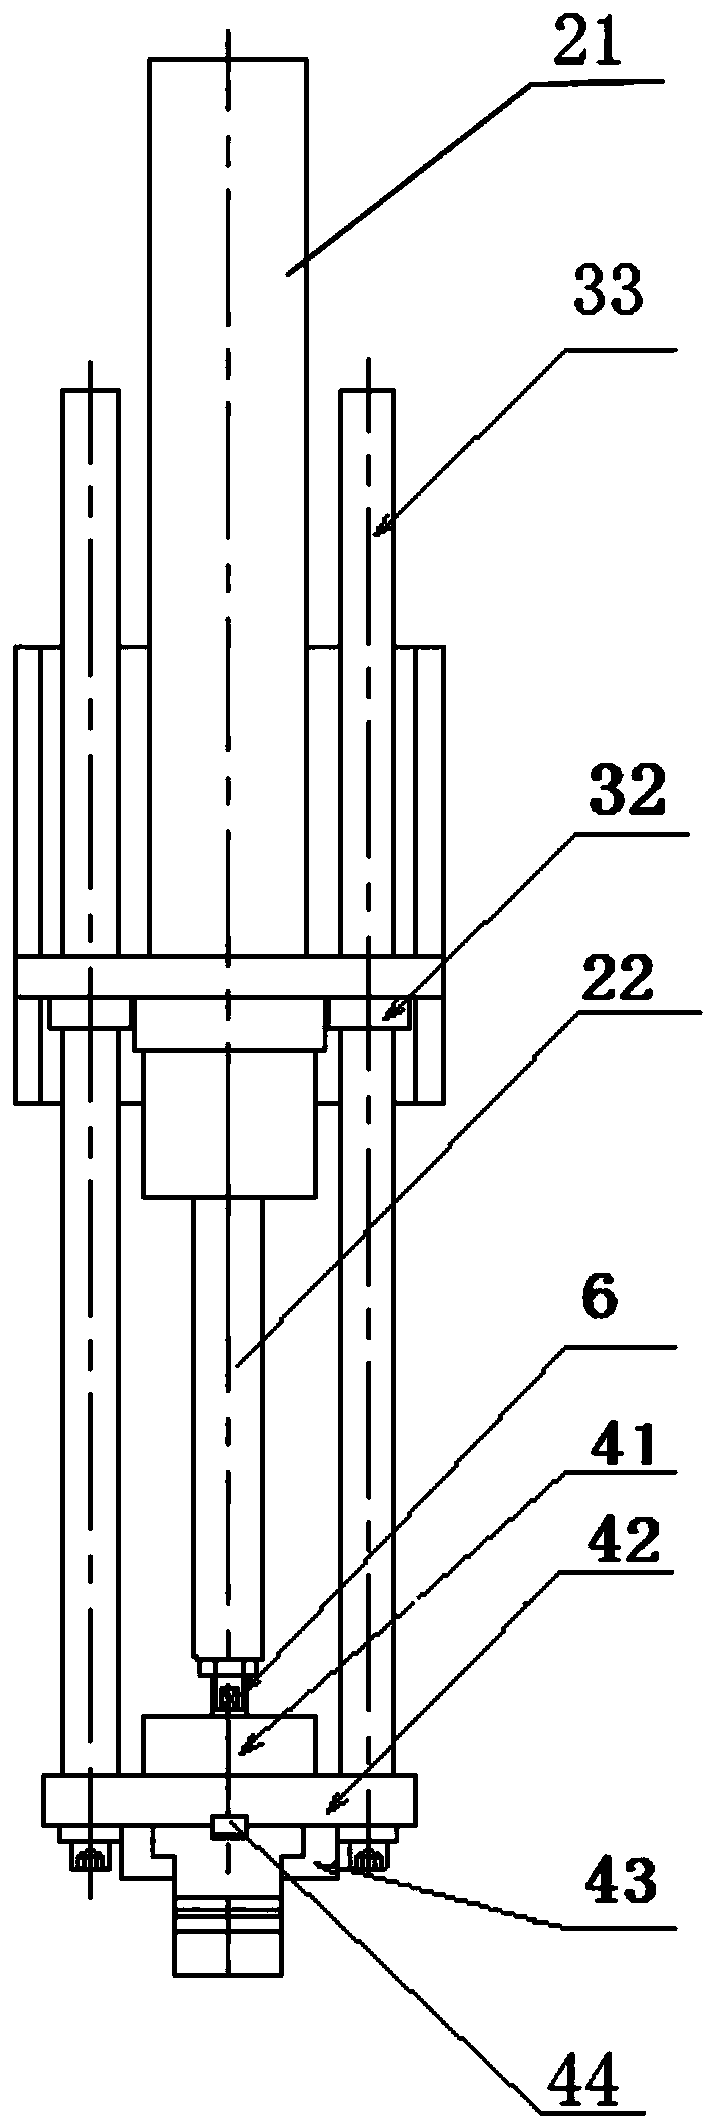 Vertical wedge mechanism